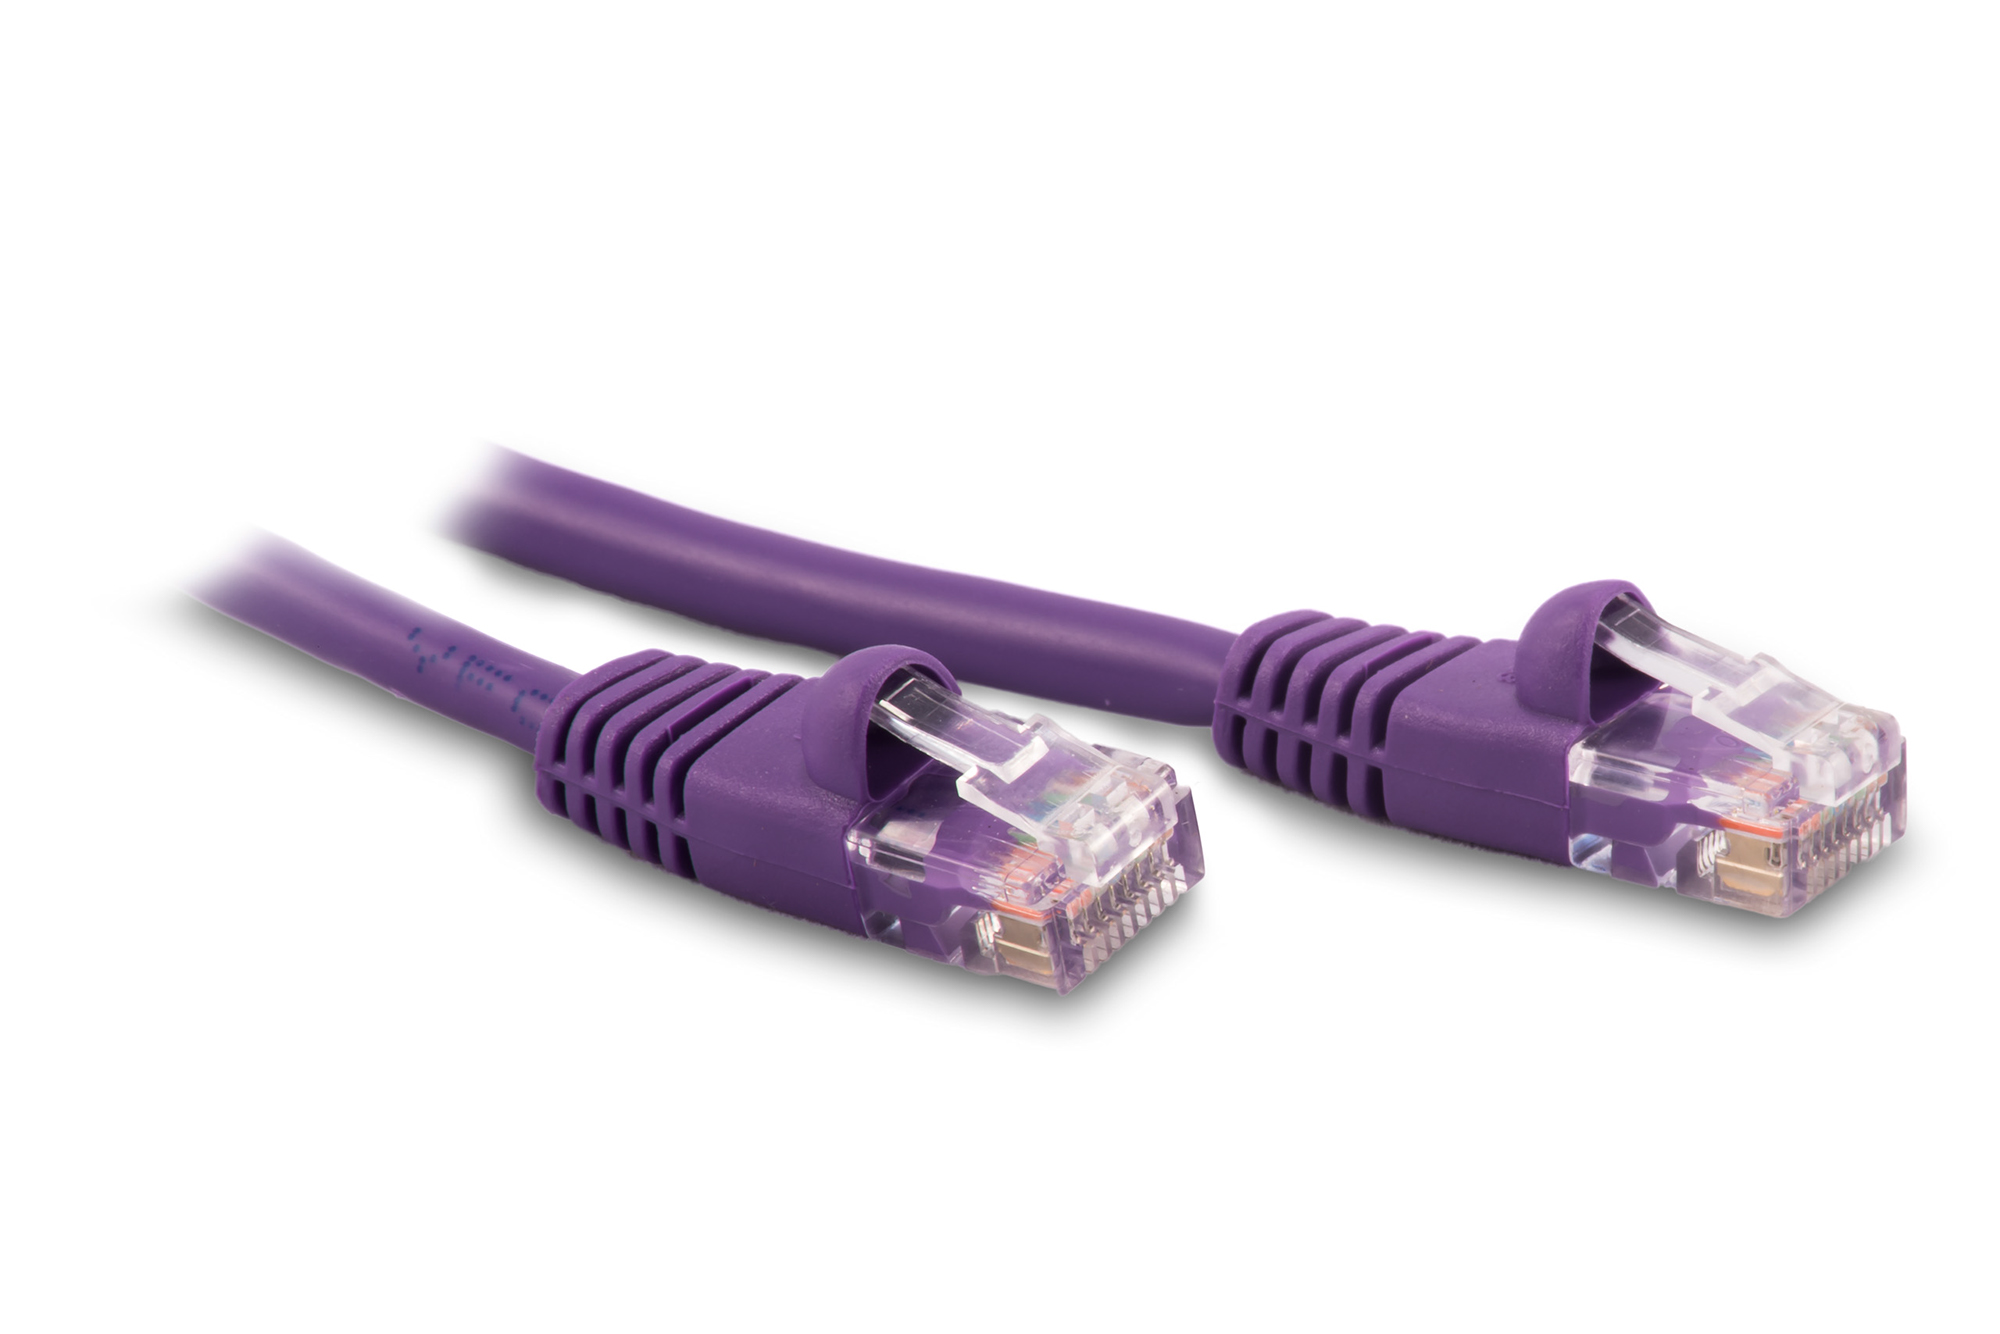 7ft Cat5e Ethernet Patch Cable - Violet Color - Snagless Boot, Stranded, RJ45, 350Mhz, 24AWG